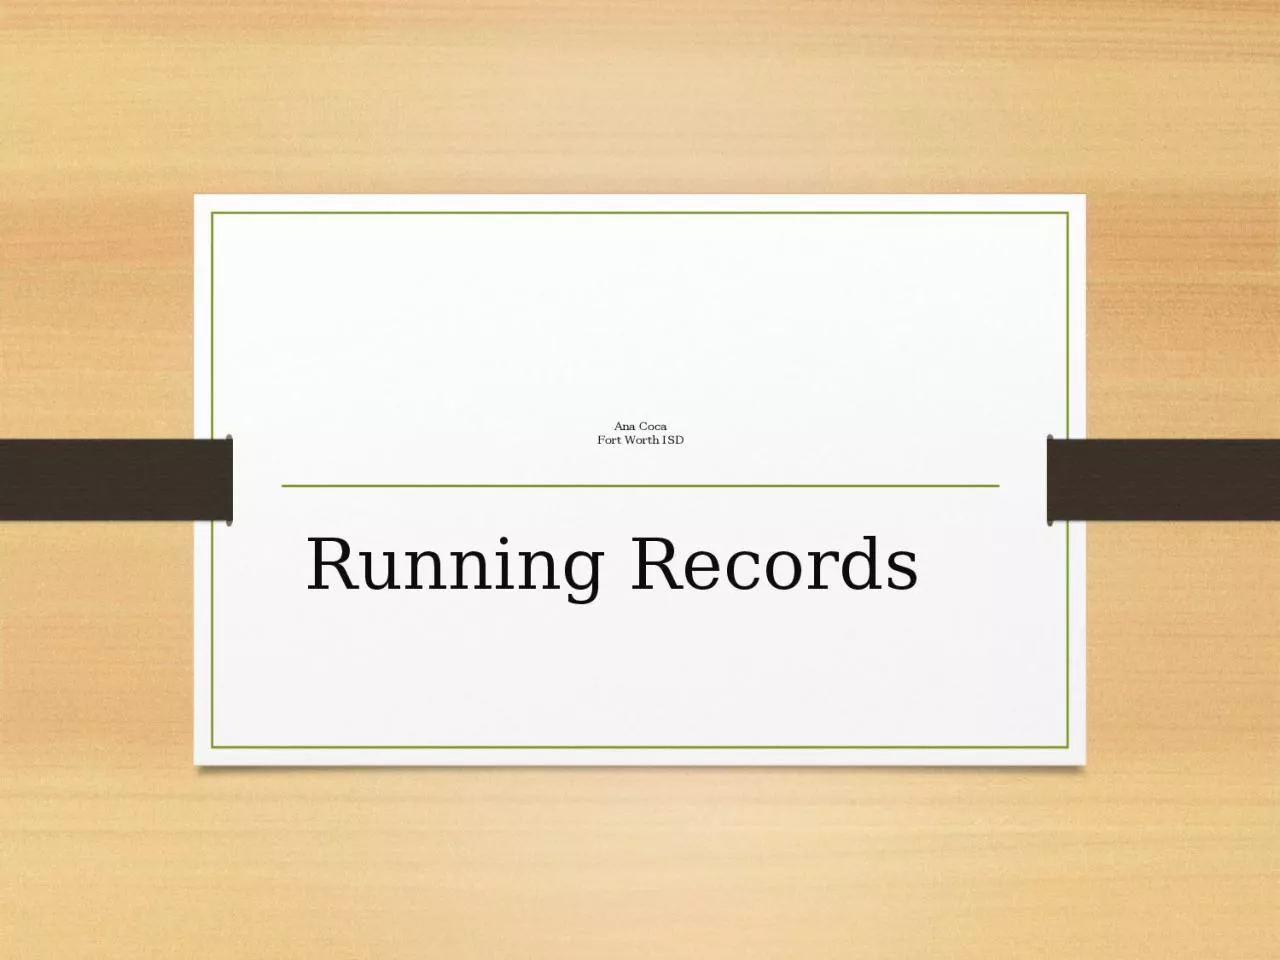 Ana Coca Fort Worth ISD Running Records